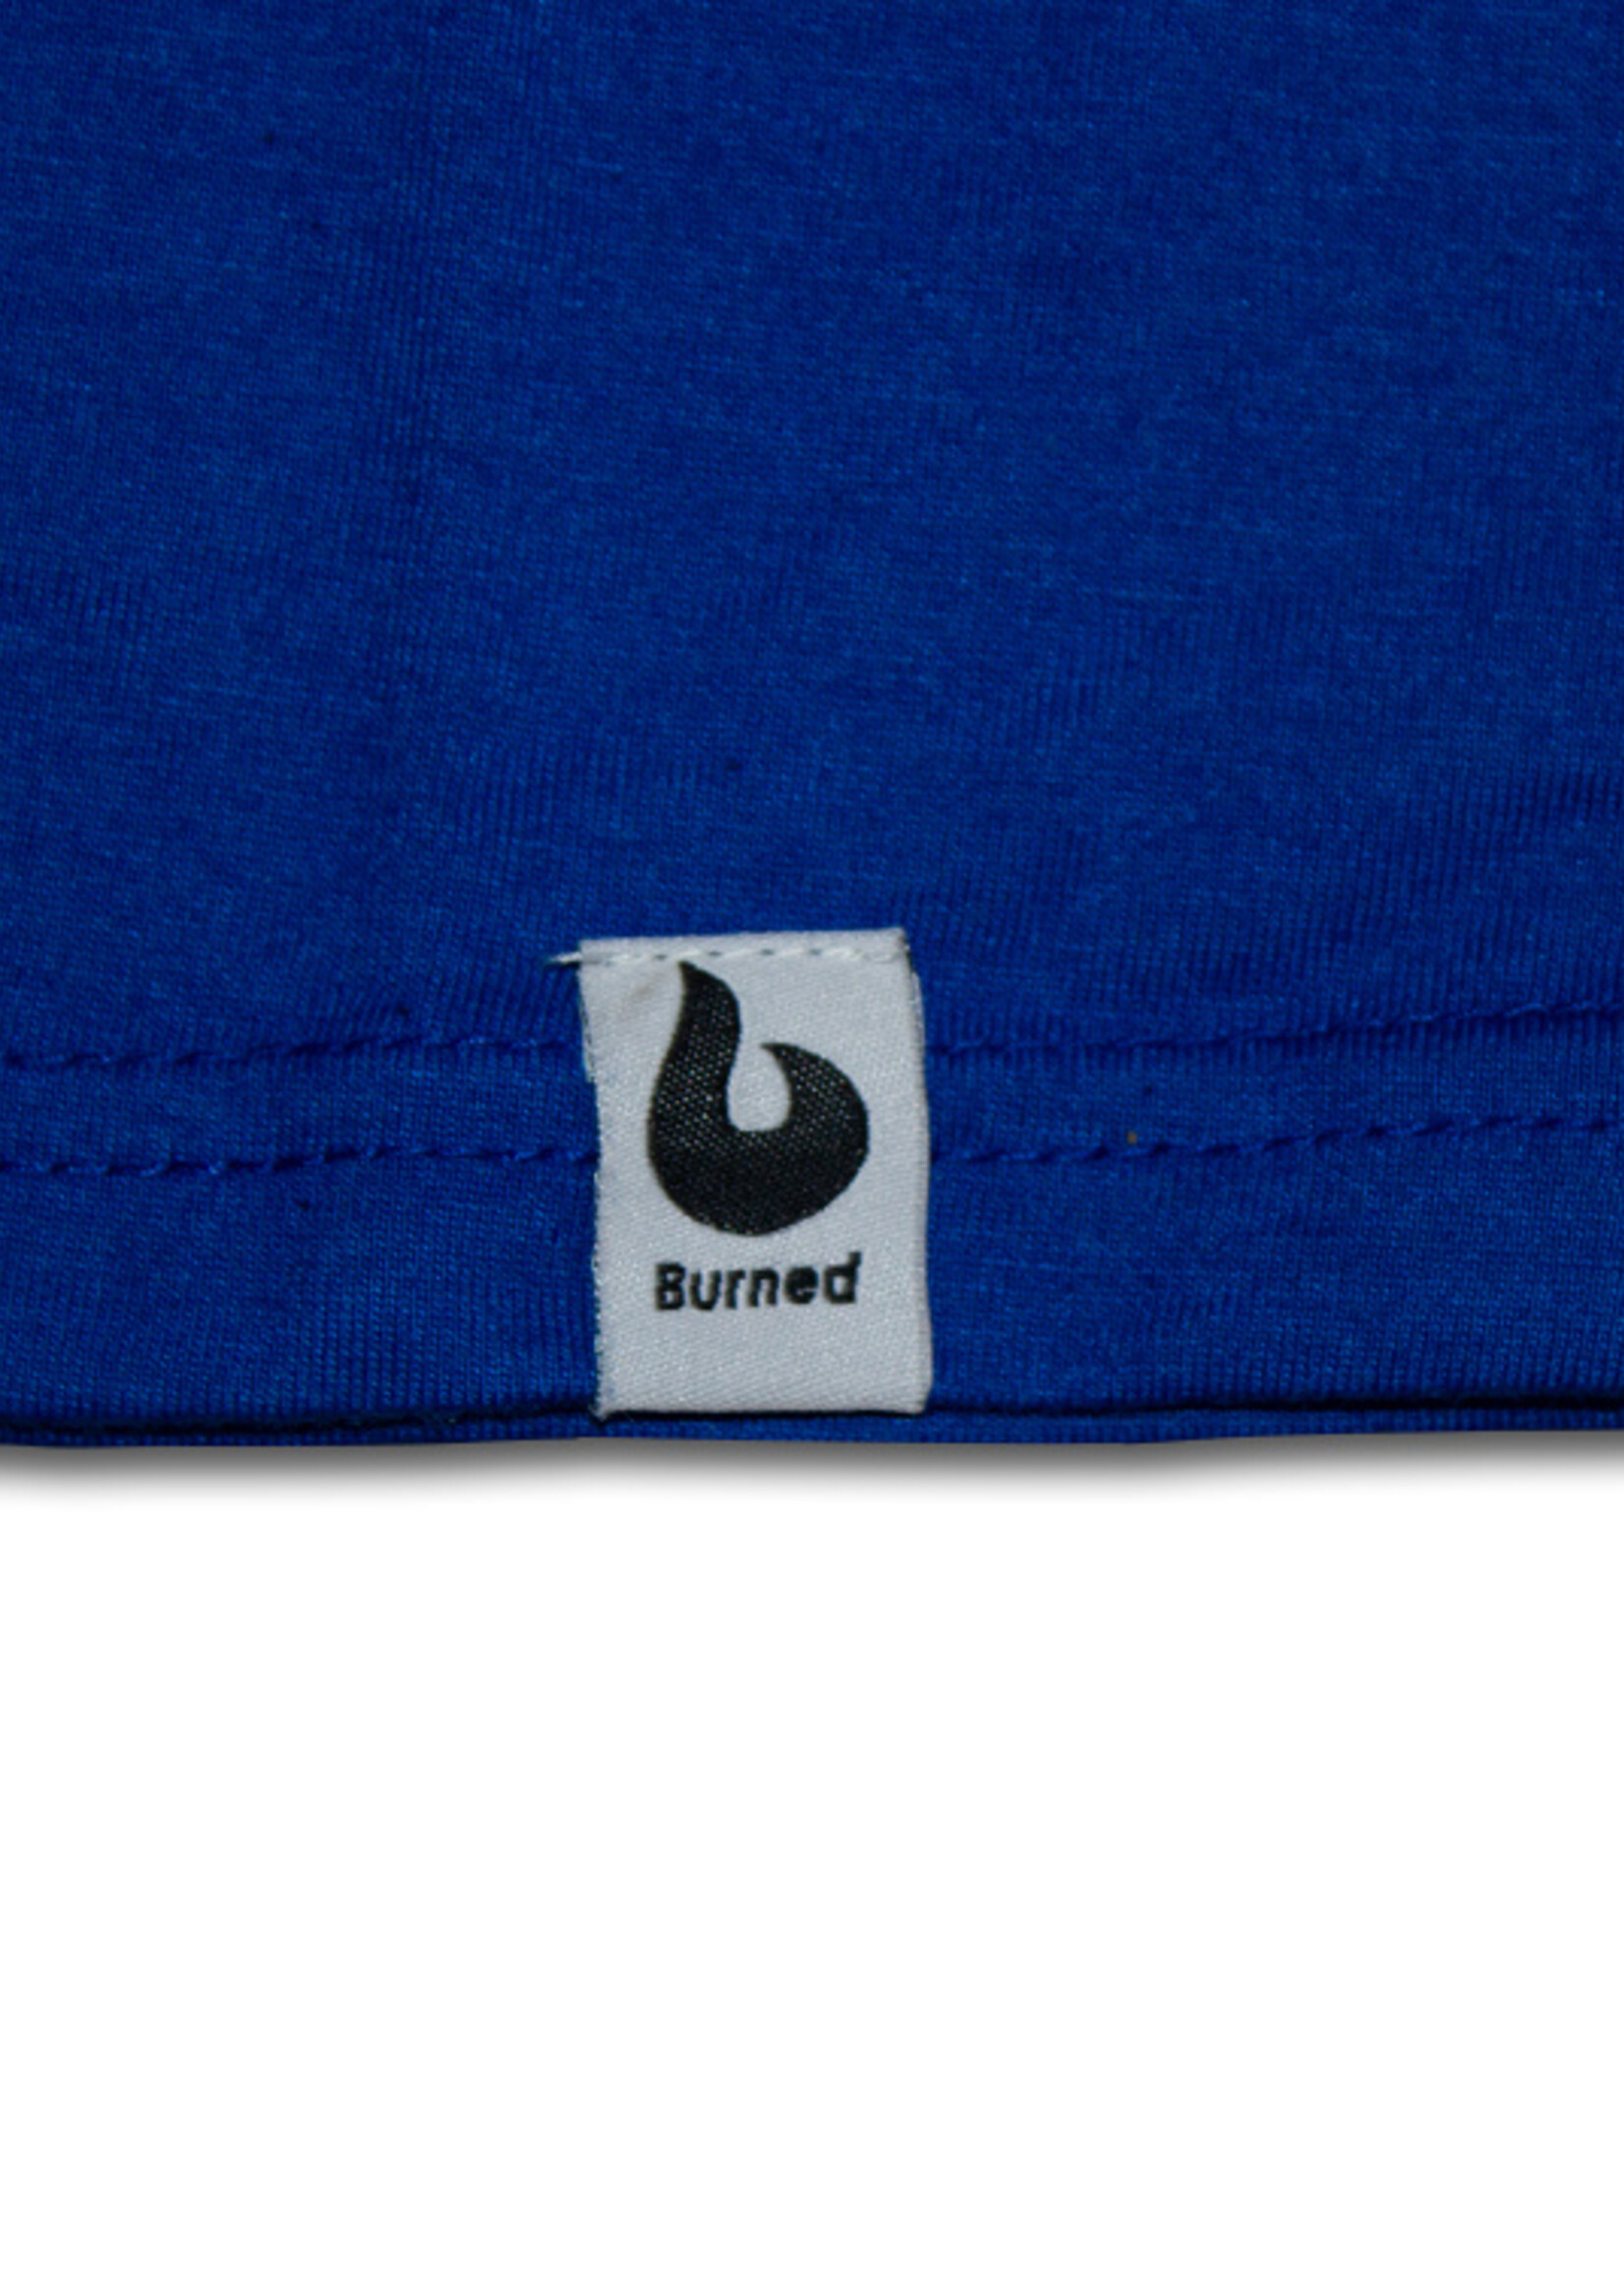 Burned Burned T-shirt Royal Blauw